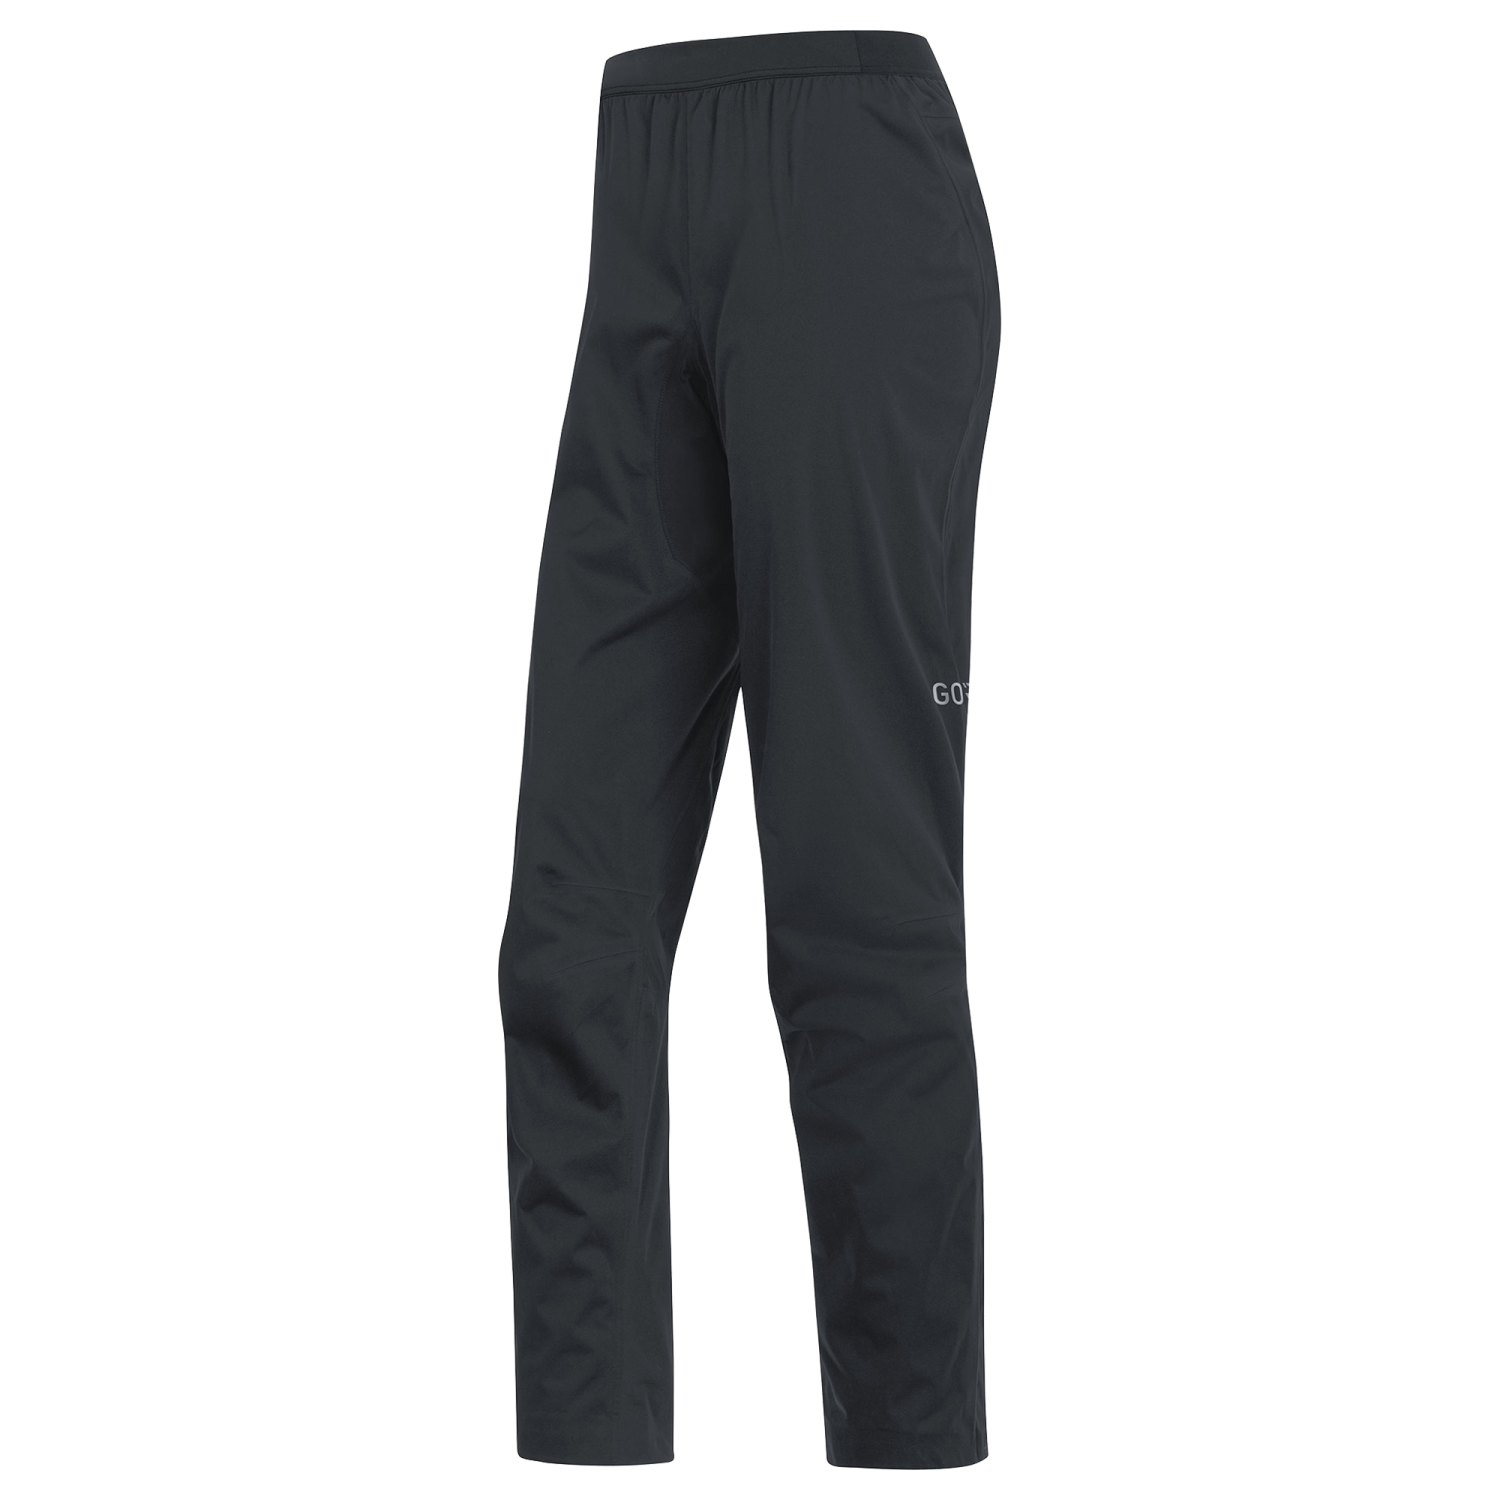 GOREWEAR C5 Women's GORE-TEX Active Trail Cycling Pants in Black | 2XS | Regular fit | Waterproof